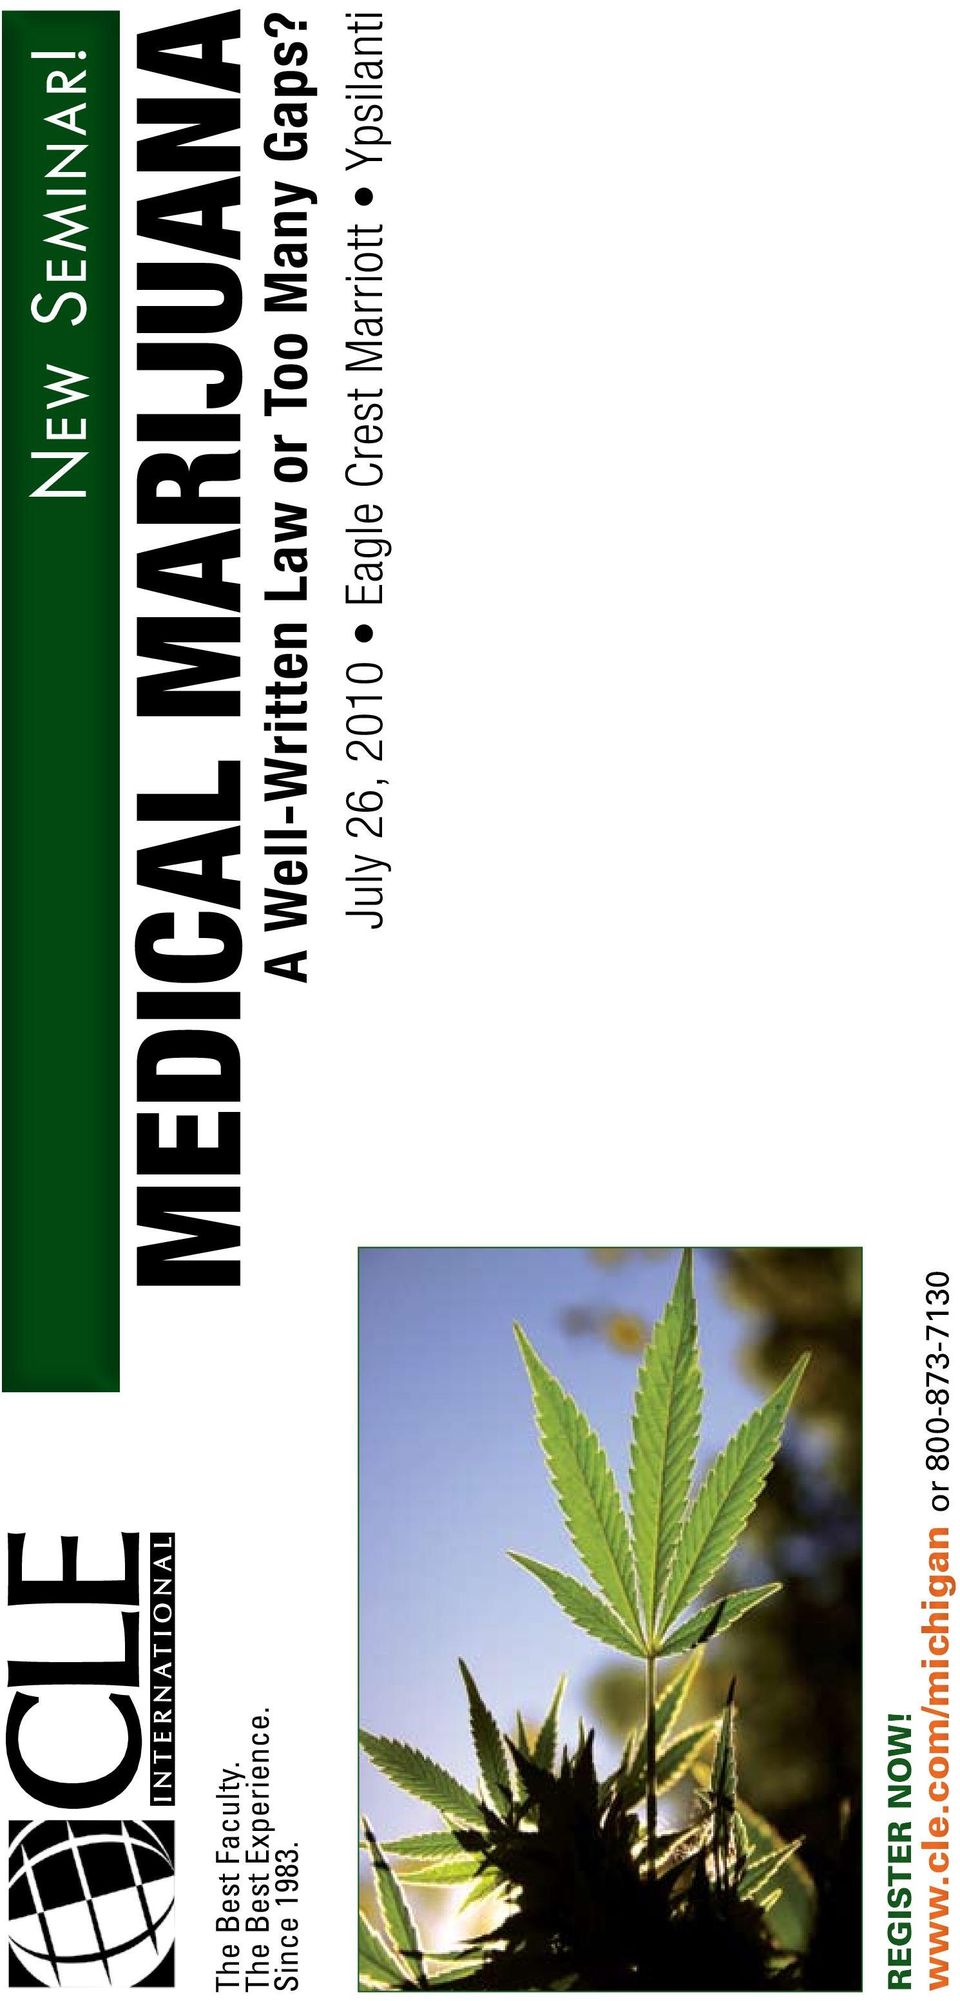 Medical Marijuana A Well-Written Law or